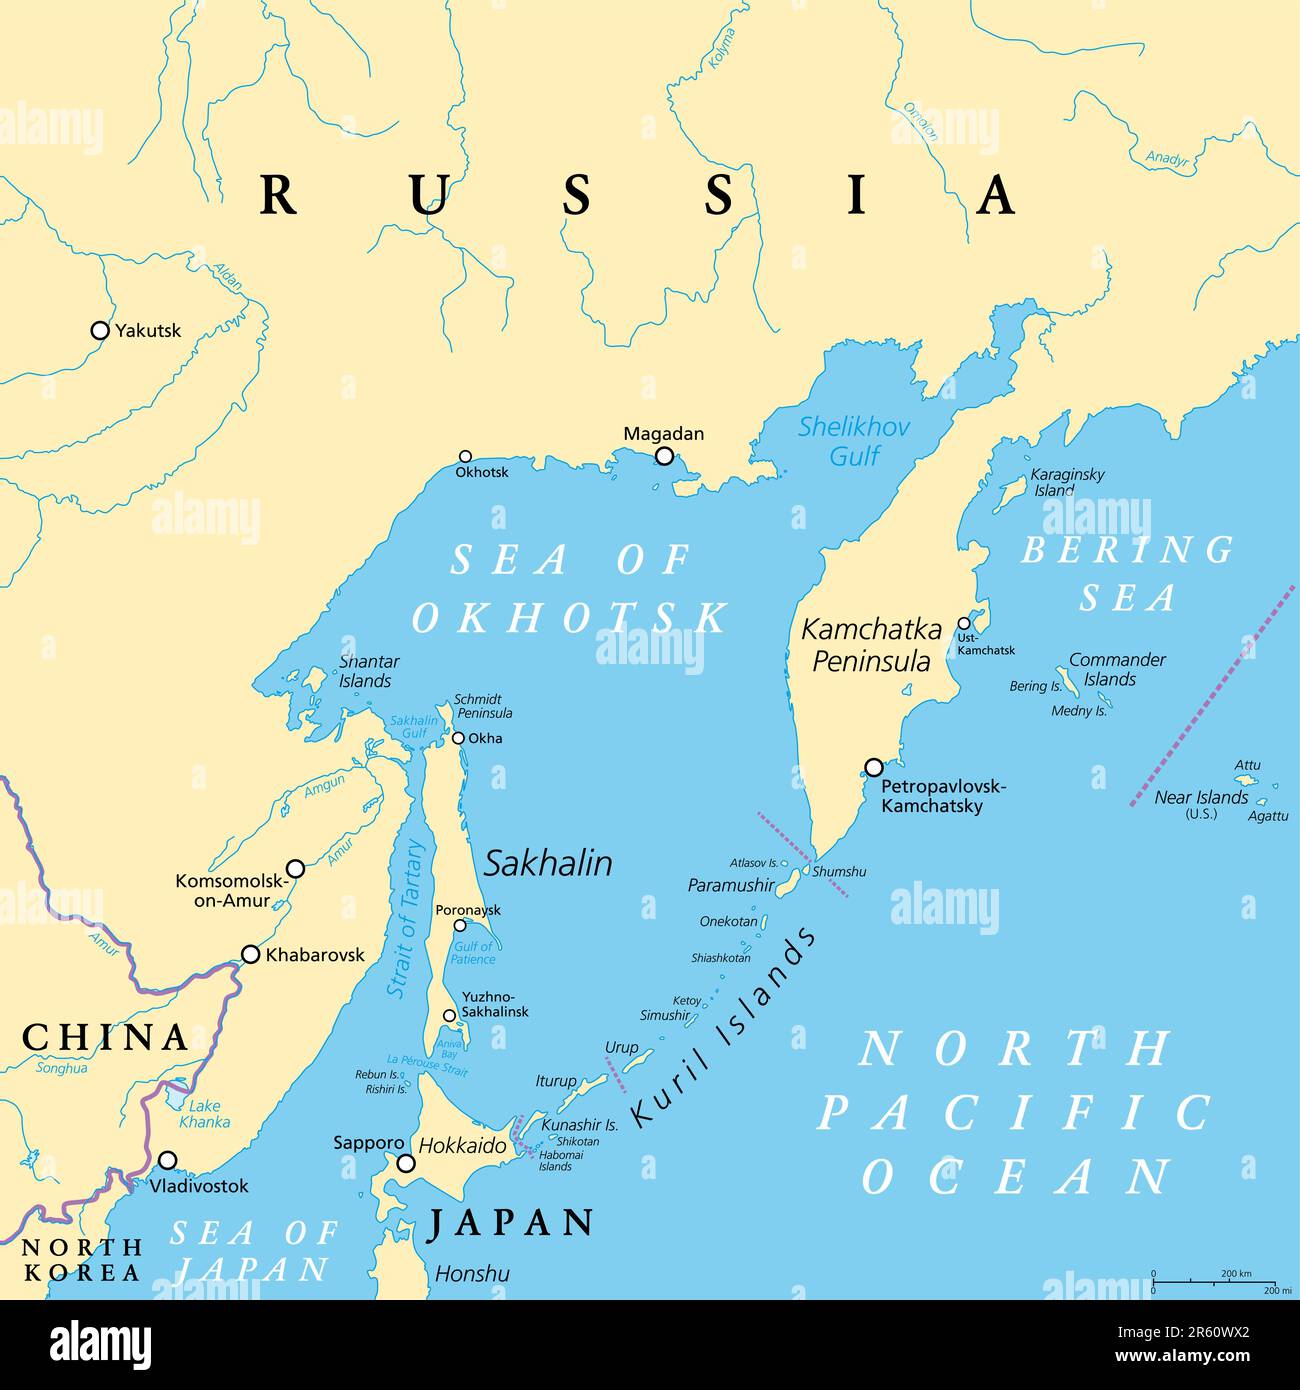 Sea of Okhotsk, political map. A marginal sea of the North Pacific Ocean, located between Kamchatka Peninsula, Kuril Islands, Hokkaido, and Sakhalin. Stock Photo